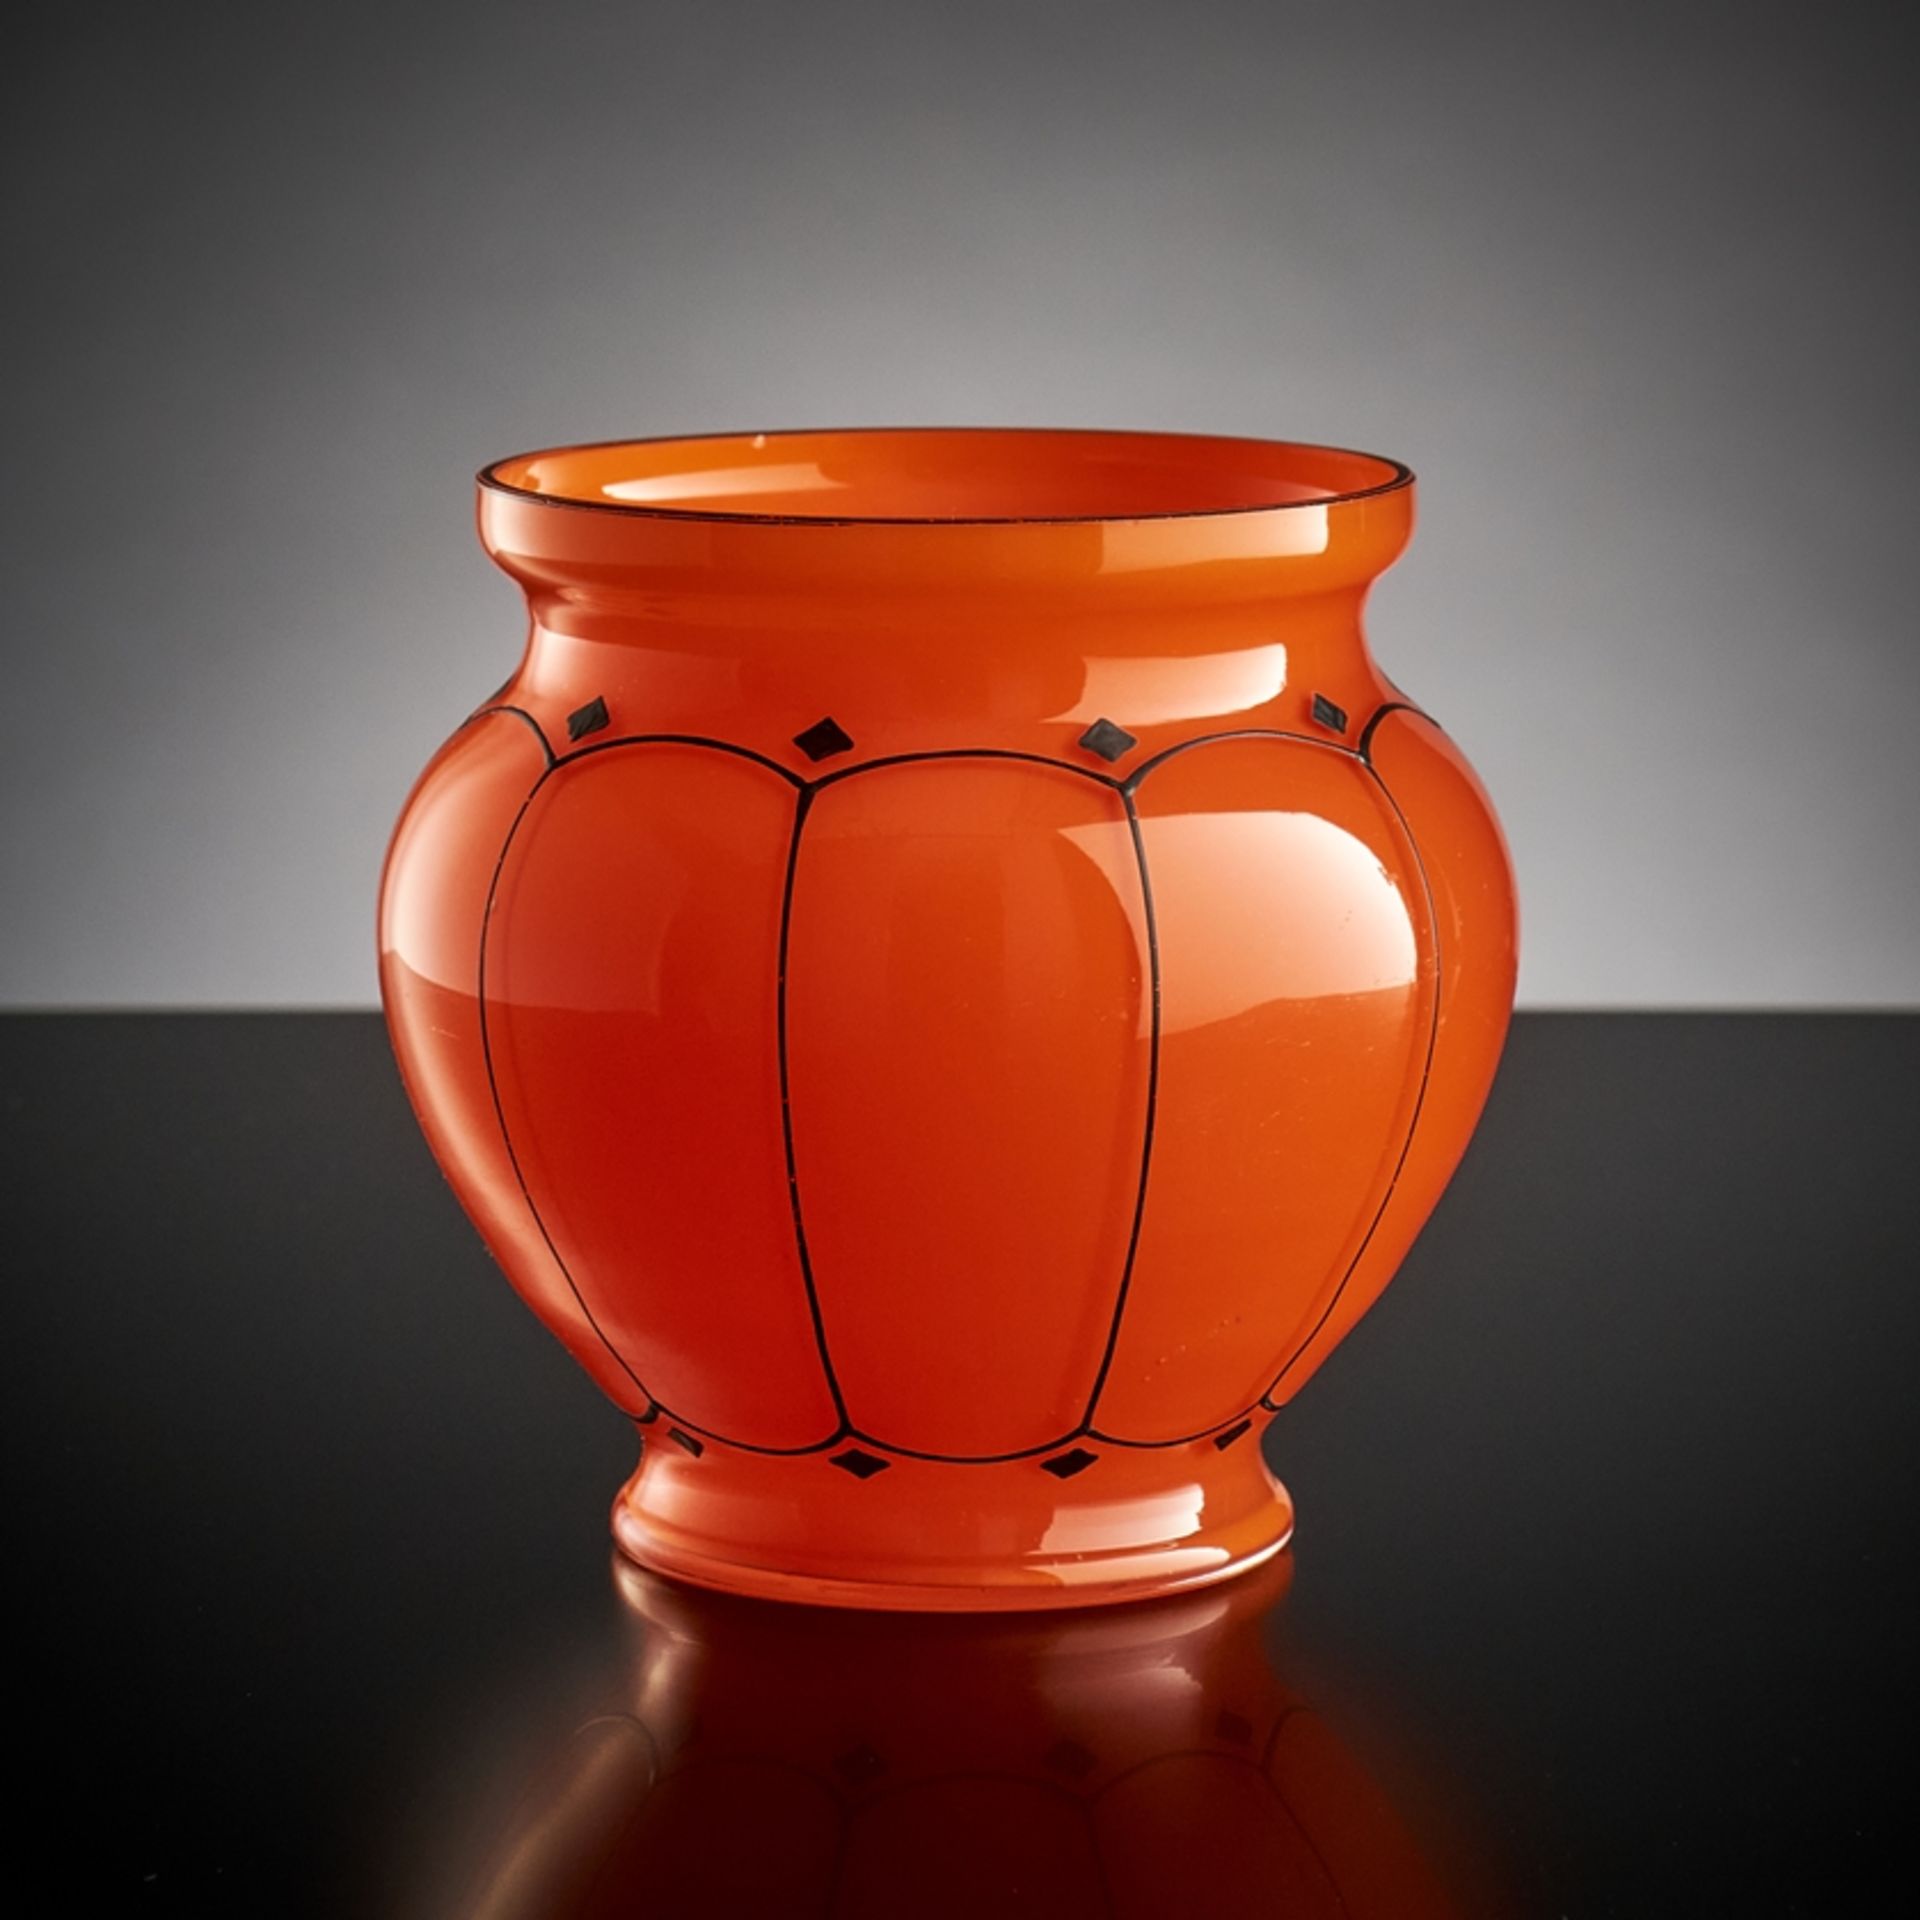 Vase. Bombiert. Orangerot unterfangen. Linearer Schwarzlotdekor. Loetz, Klostermühle, um 1920. H 11